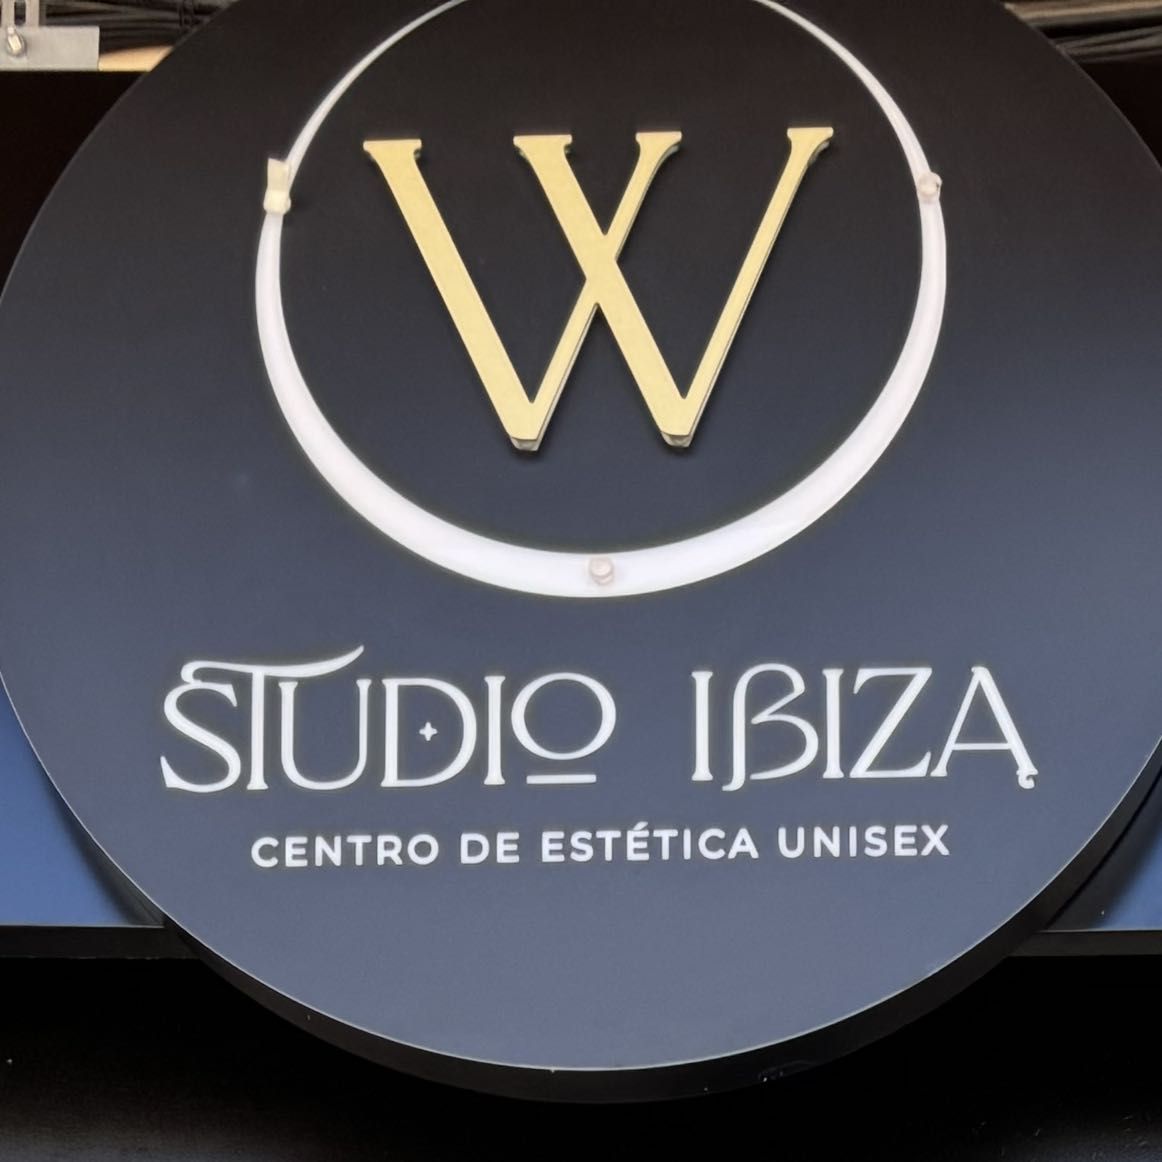 W Studio Ibiza, Avinguda d'Espanya 91, 07800, Eivissa